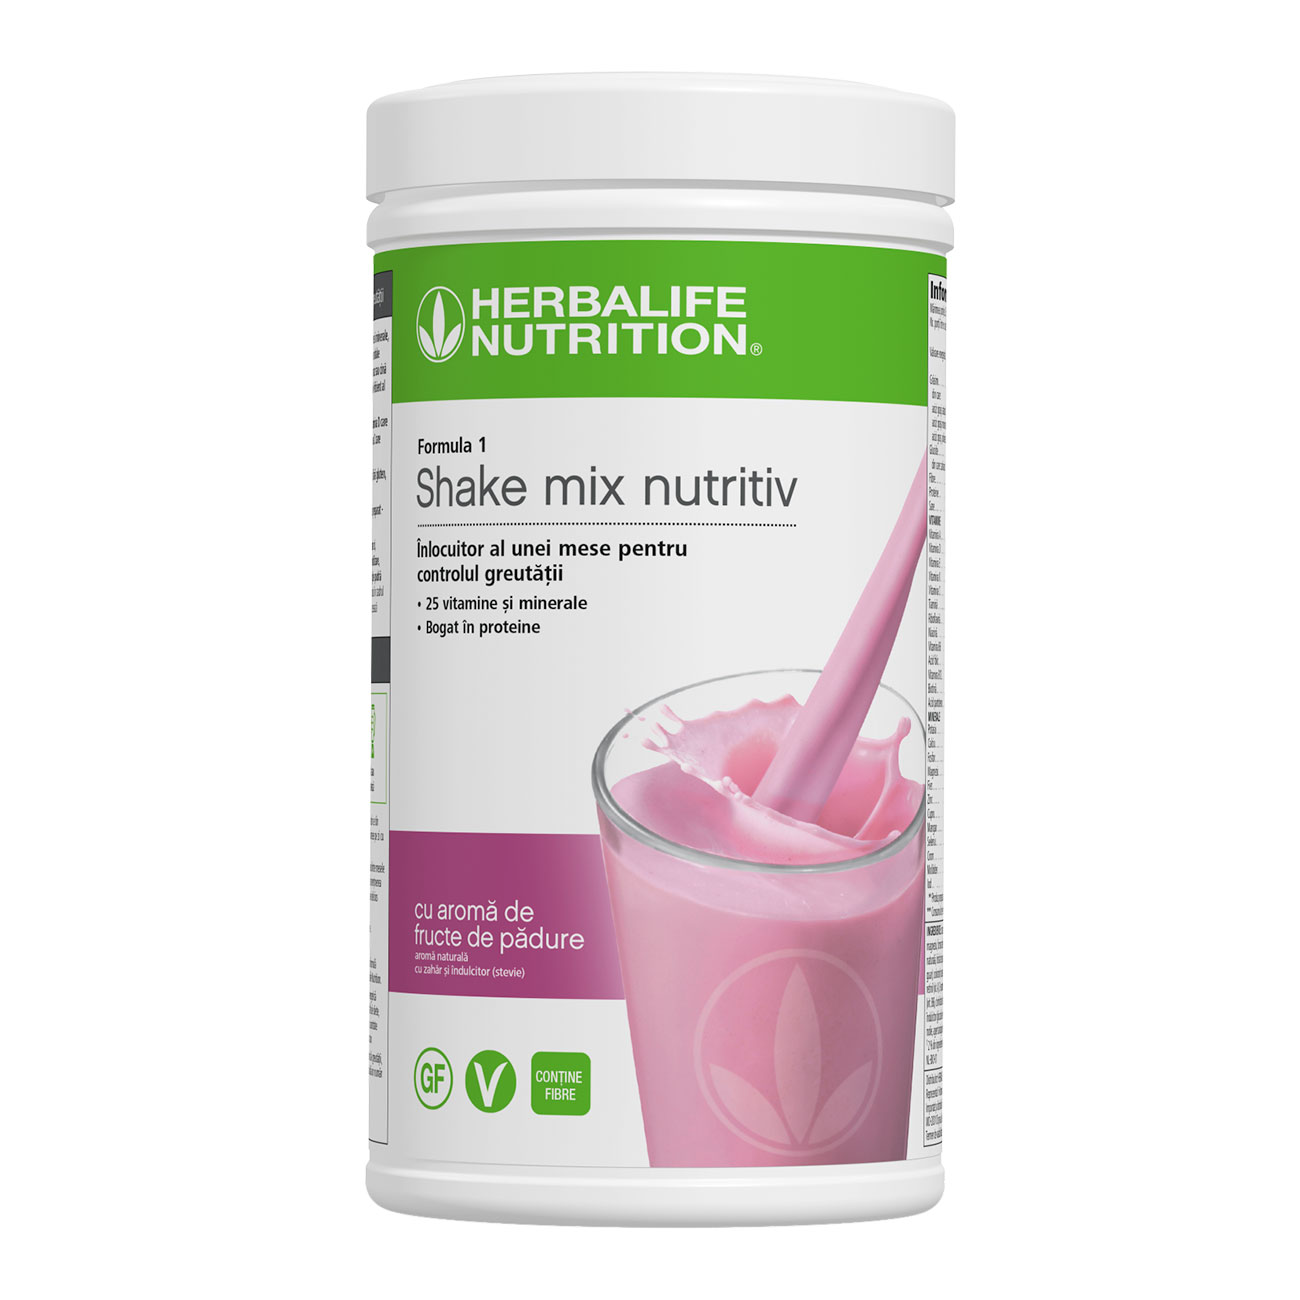 Formula 1 Shake mix nutritiv Fructe de pădure product shot